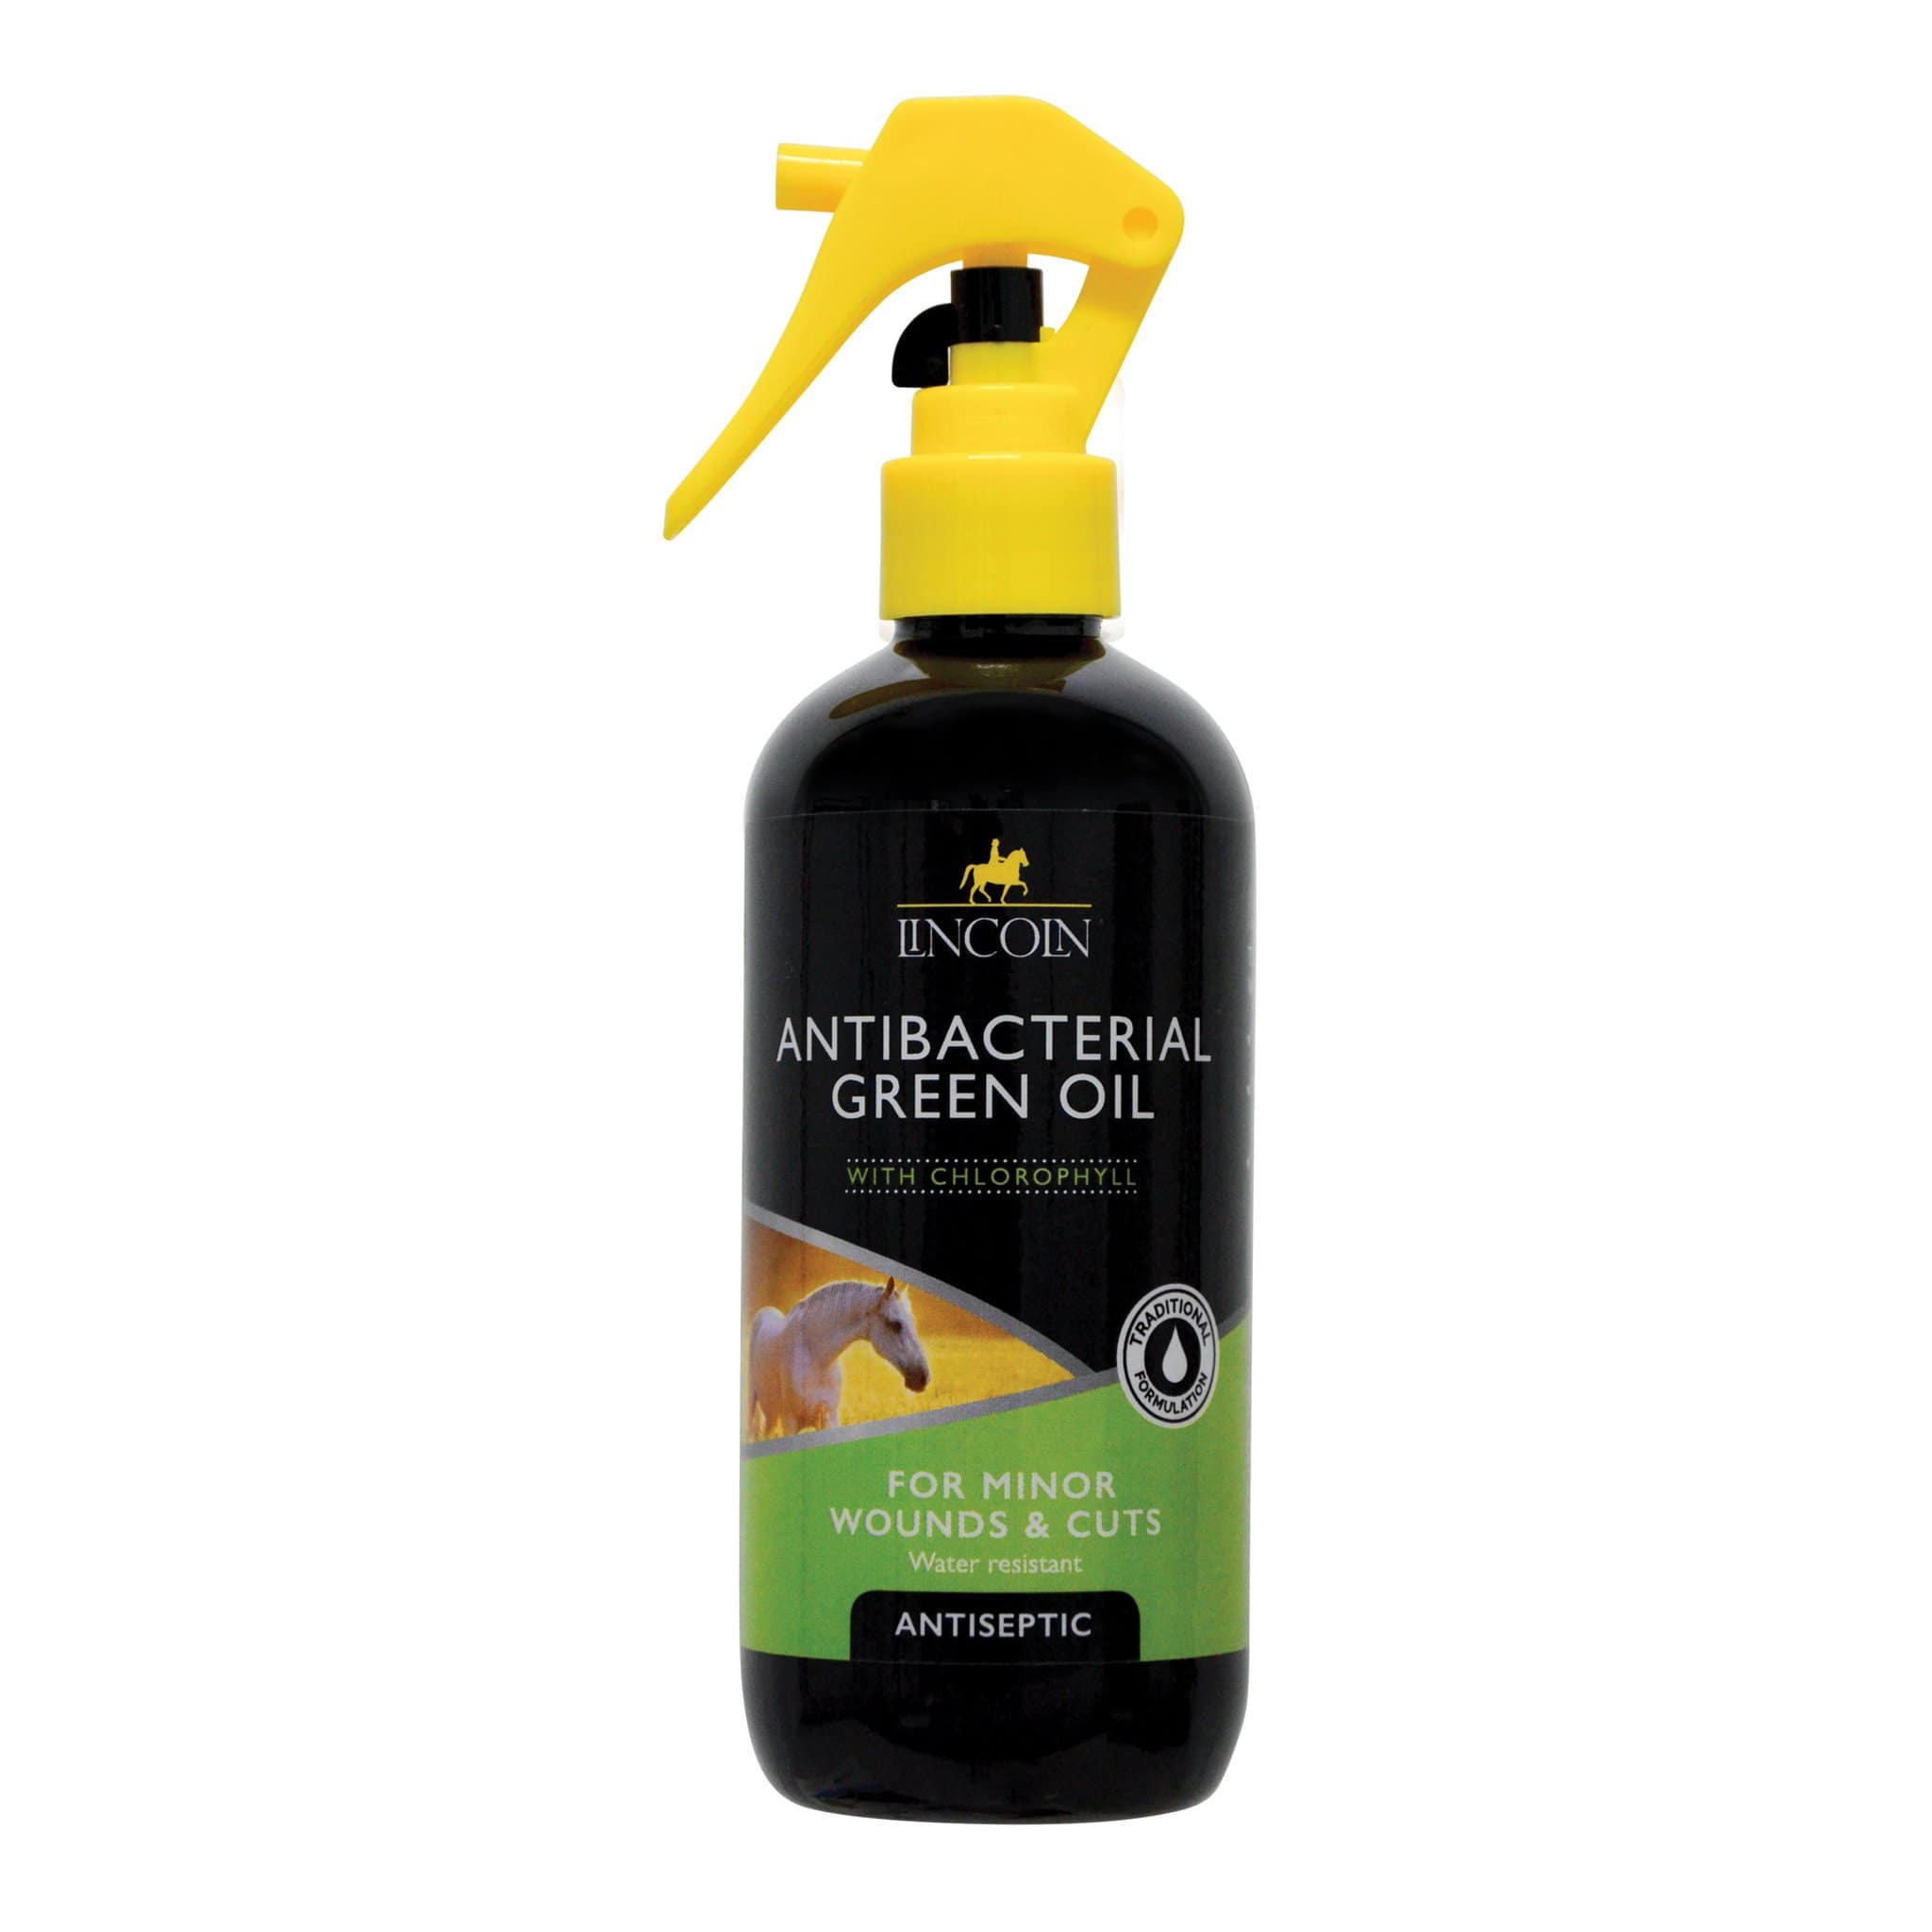 Lincoln Antibacterial Green Oil 4112